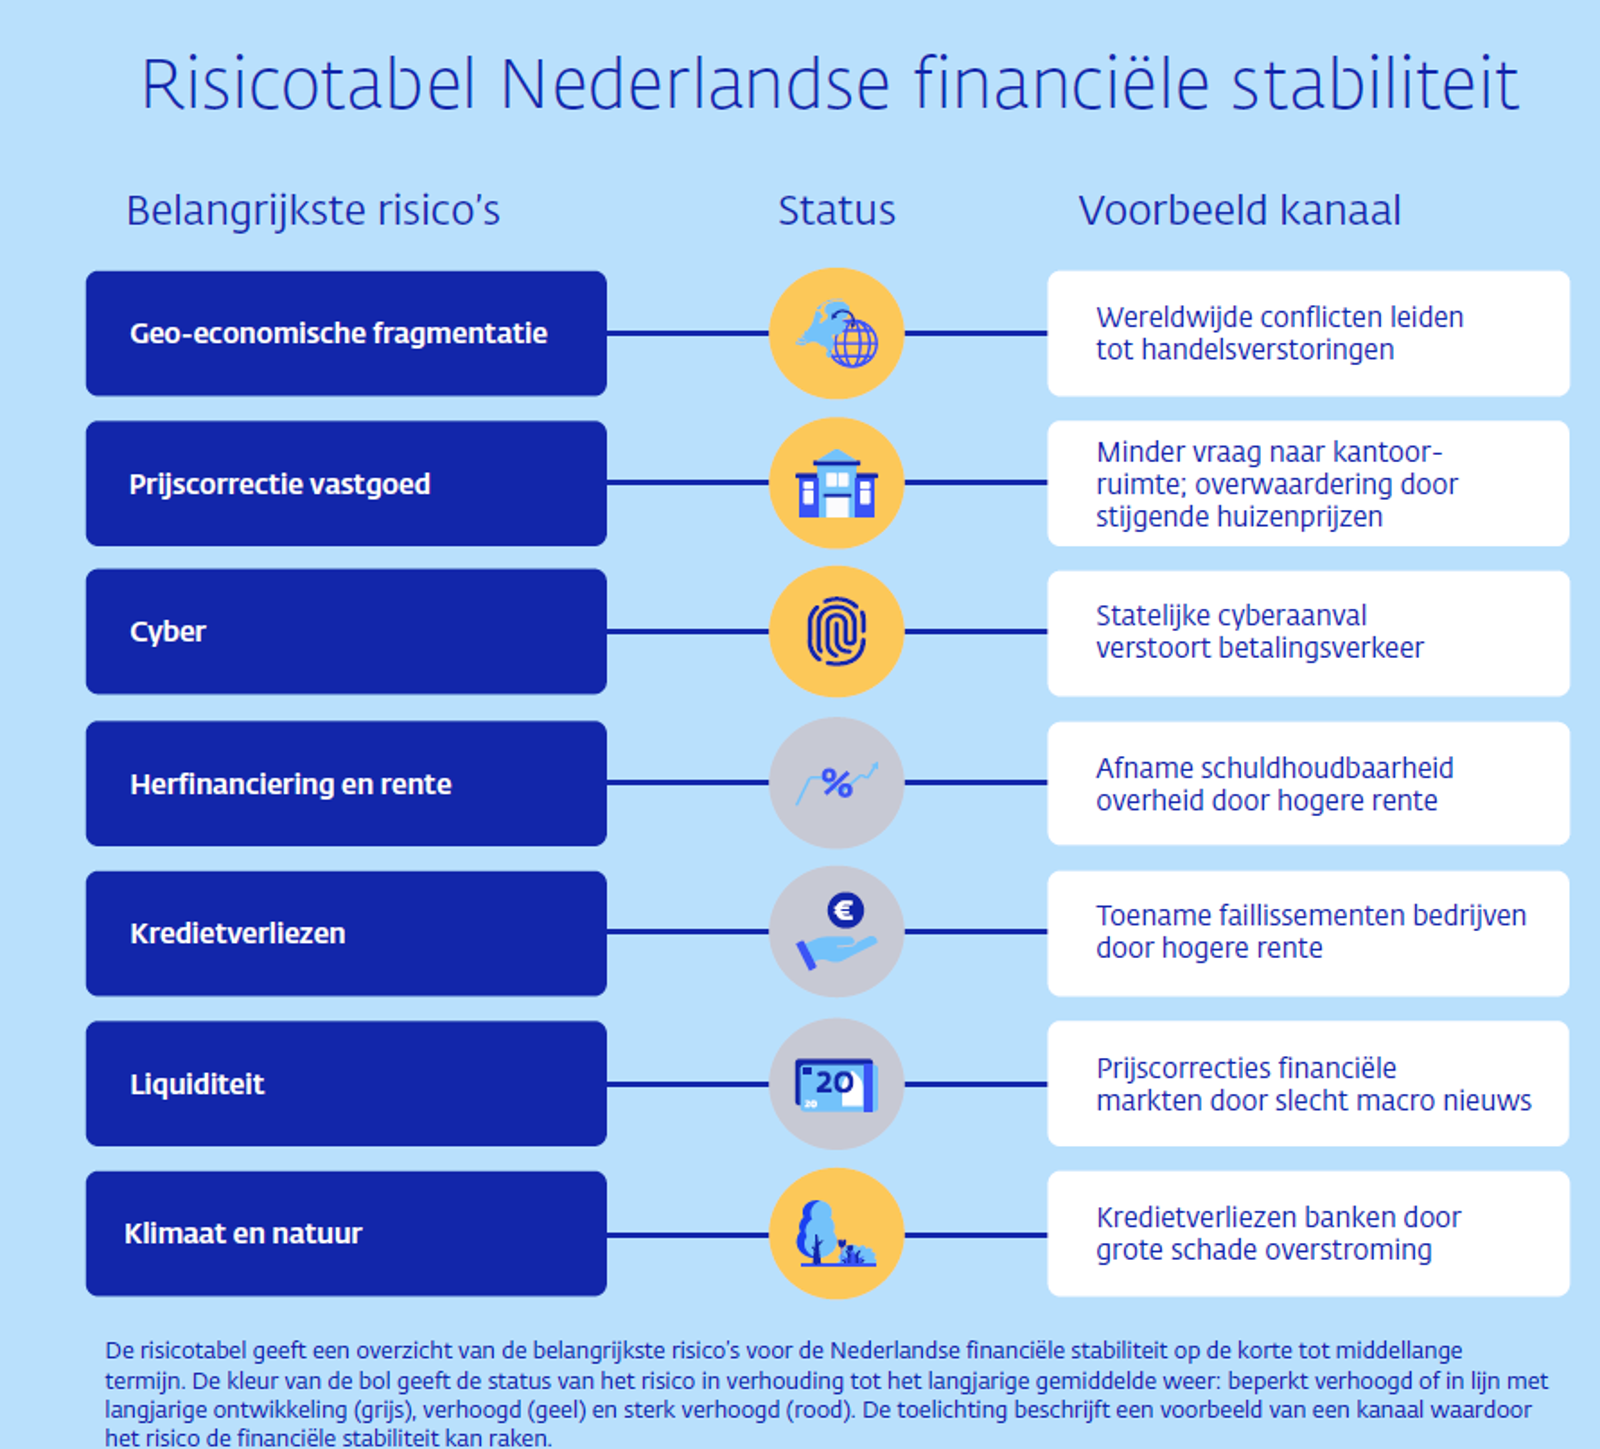 Risicotabel Nederlandse financiële stabiliteit